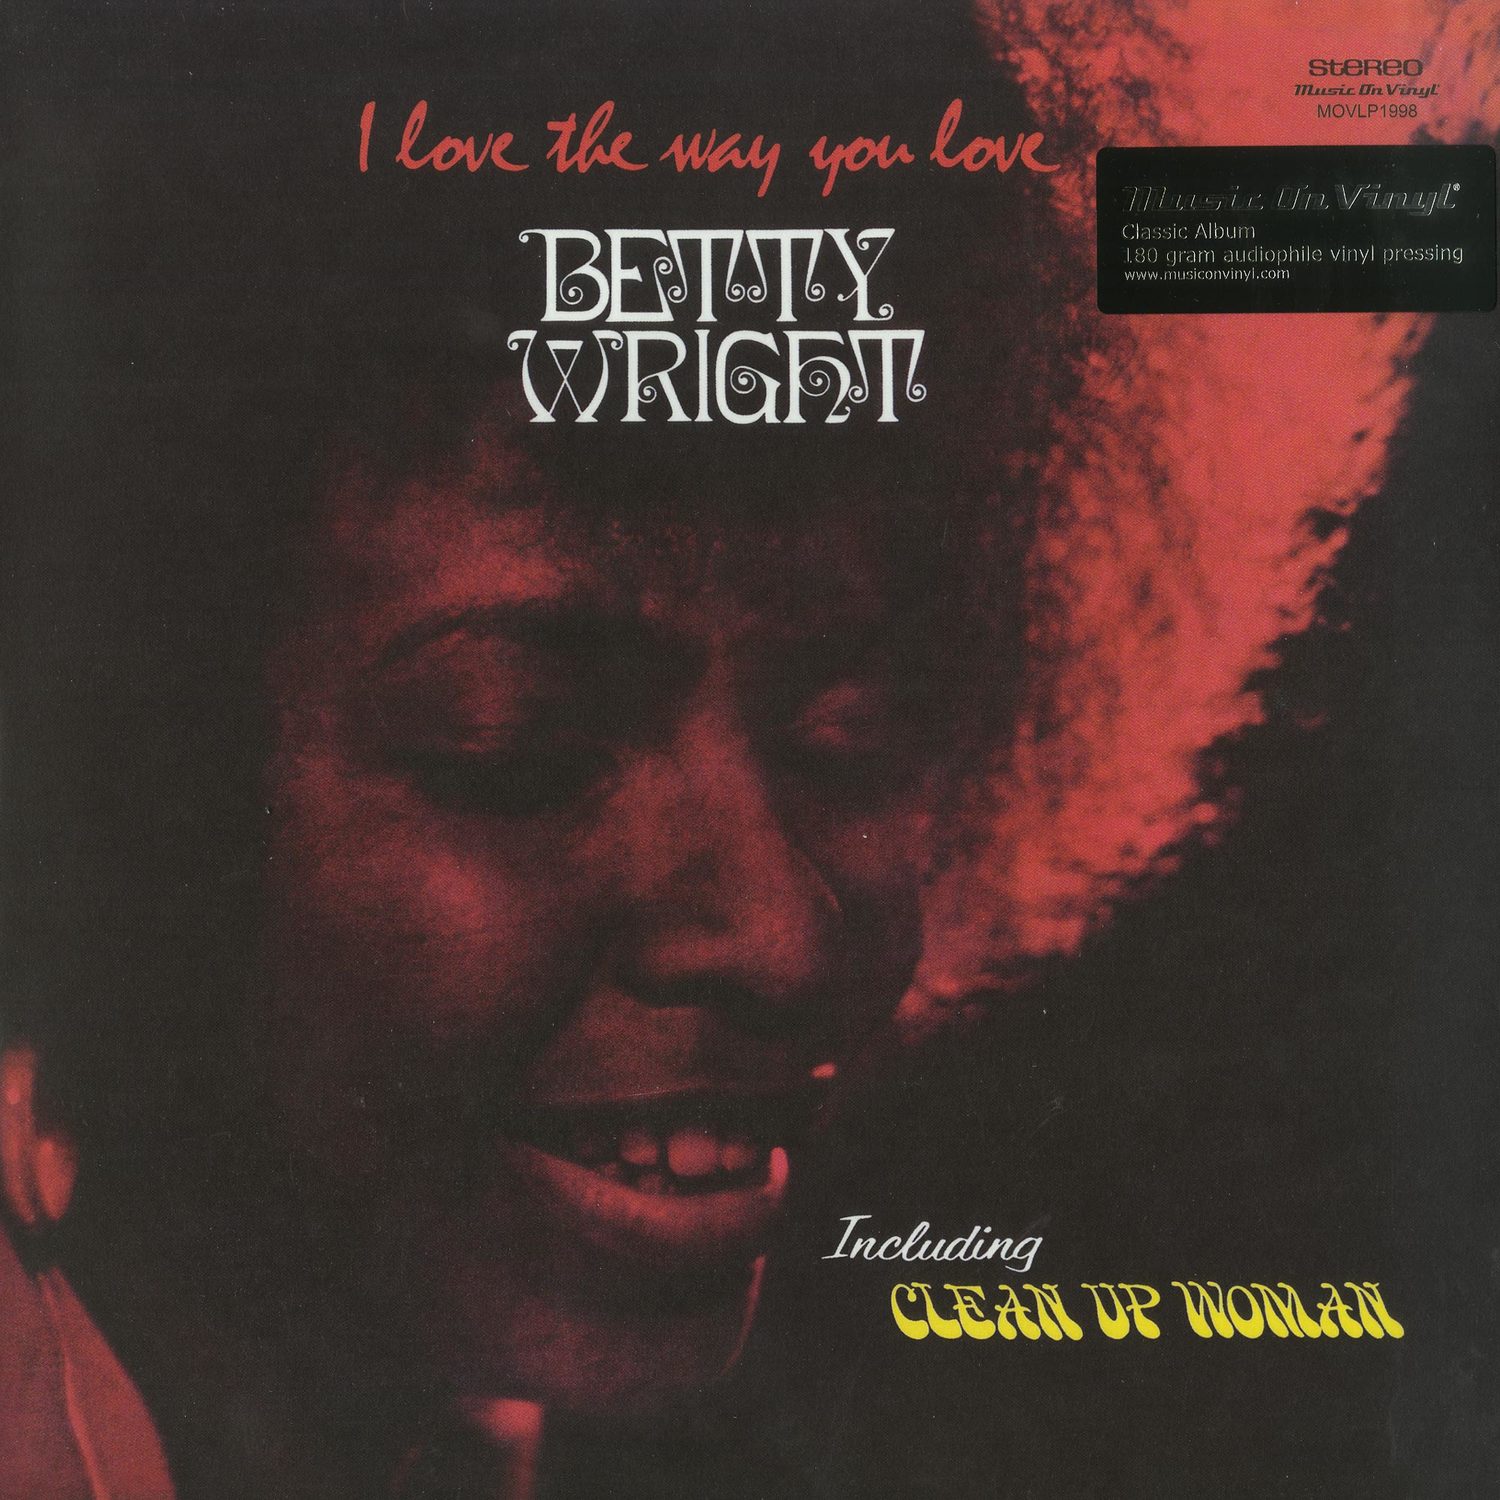 Betty Wright - I LOVE THE WAY YOU LOVE 